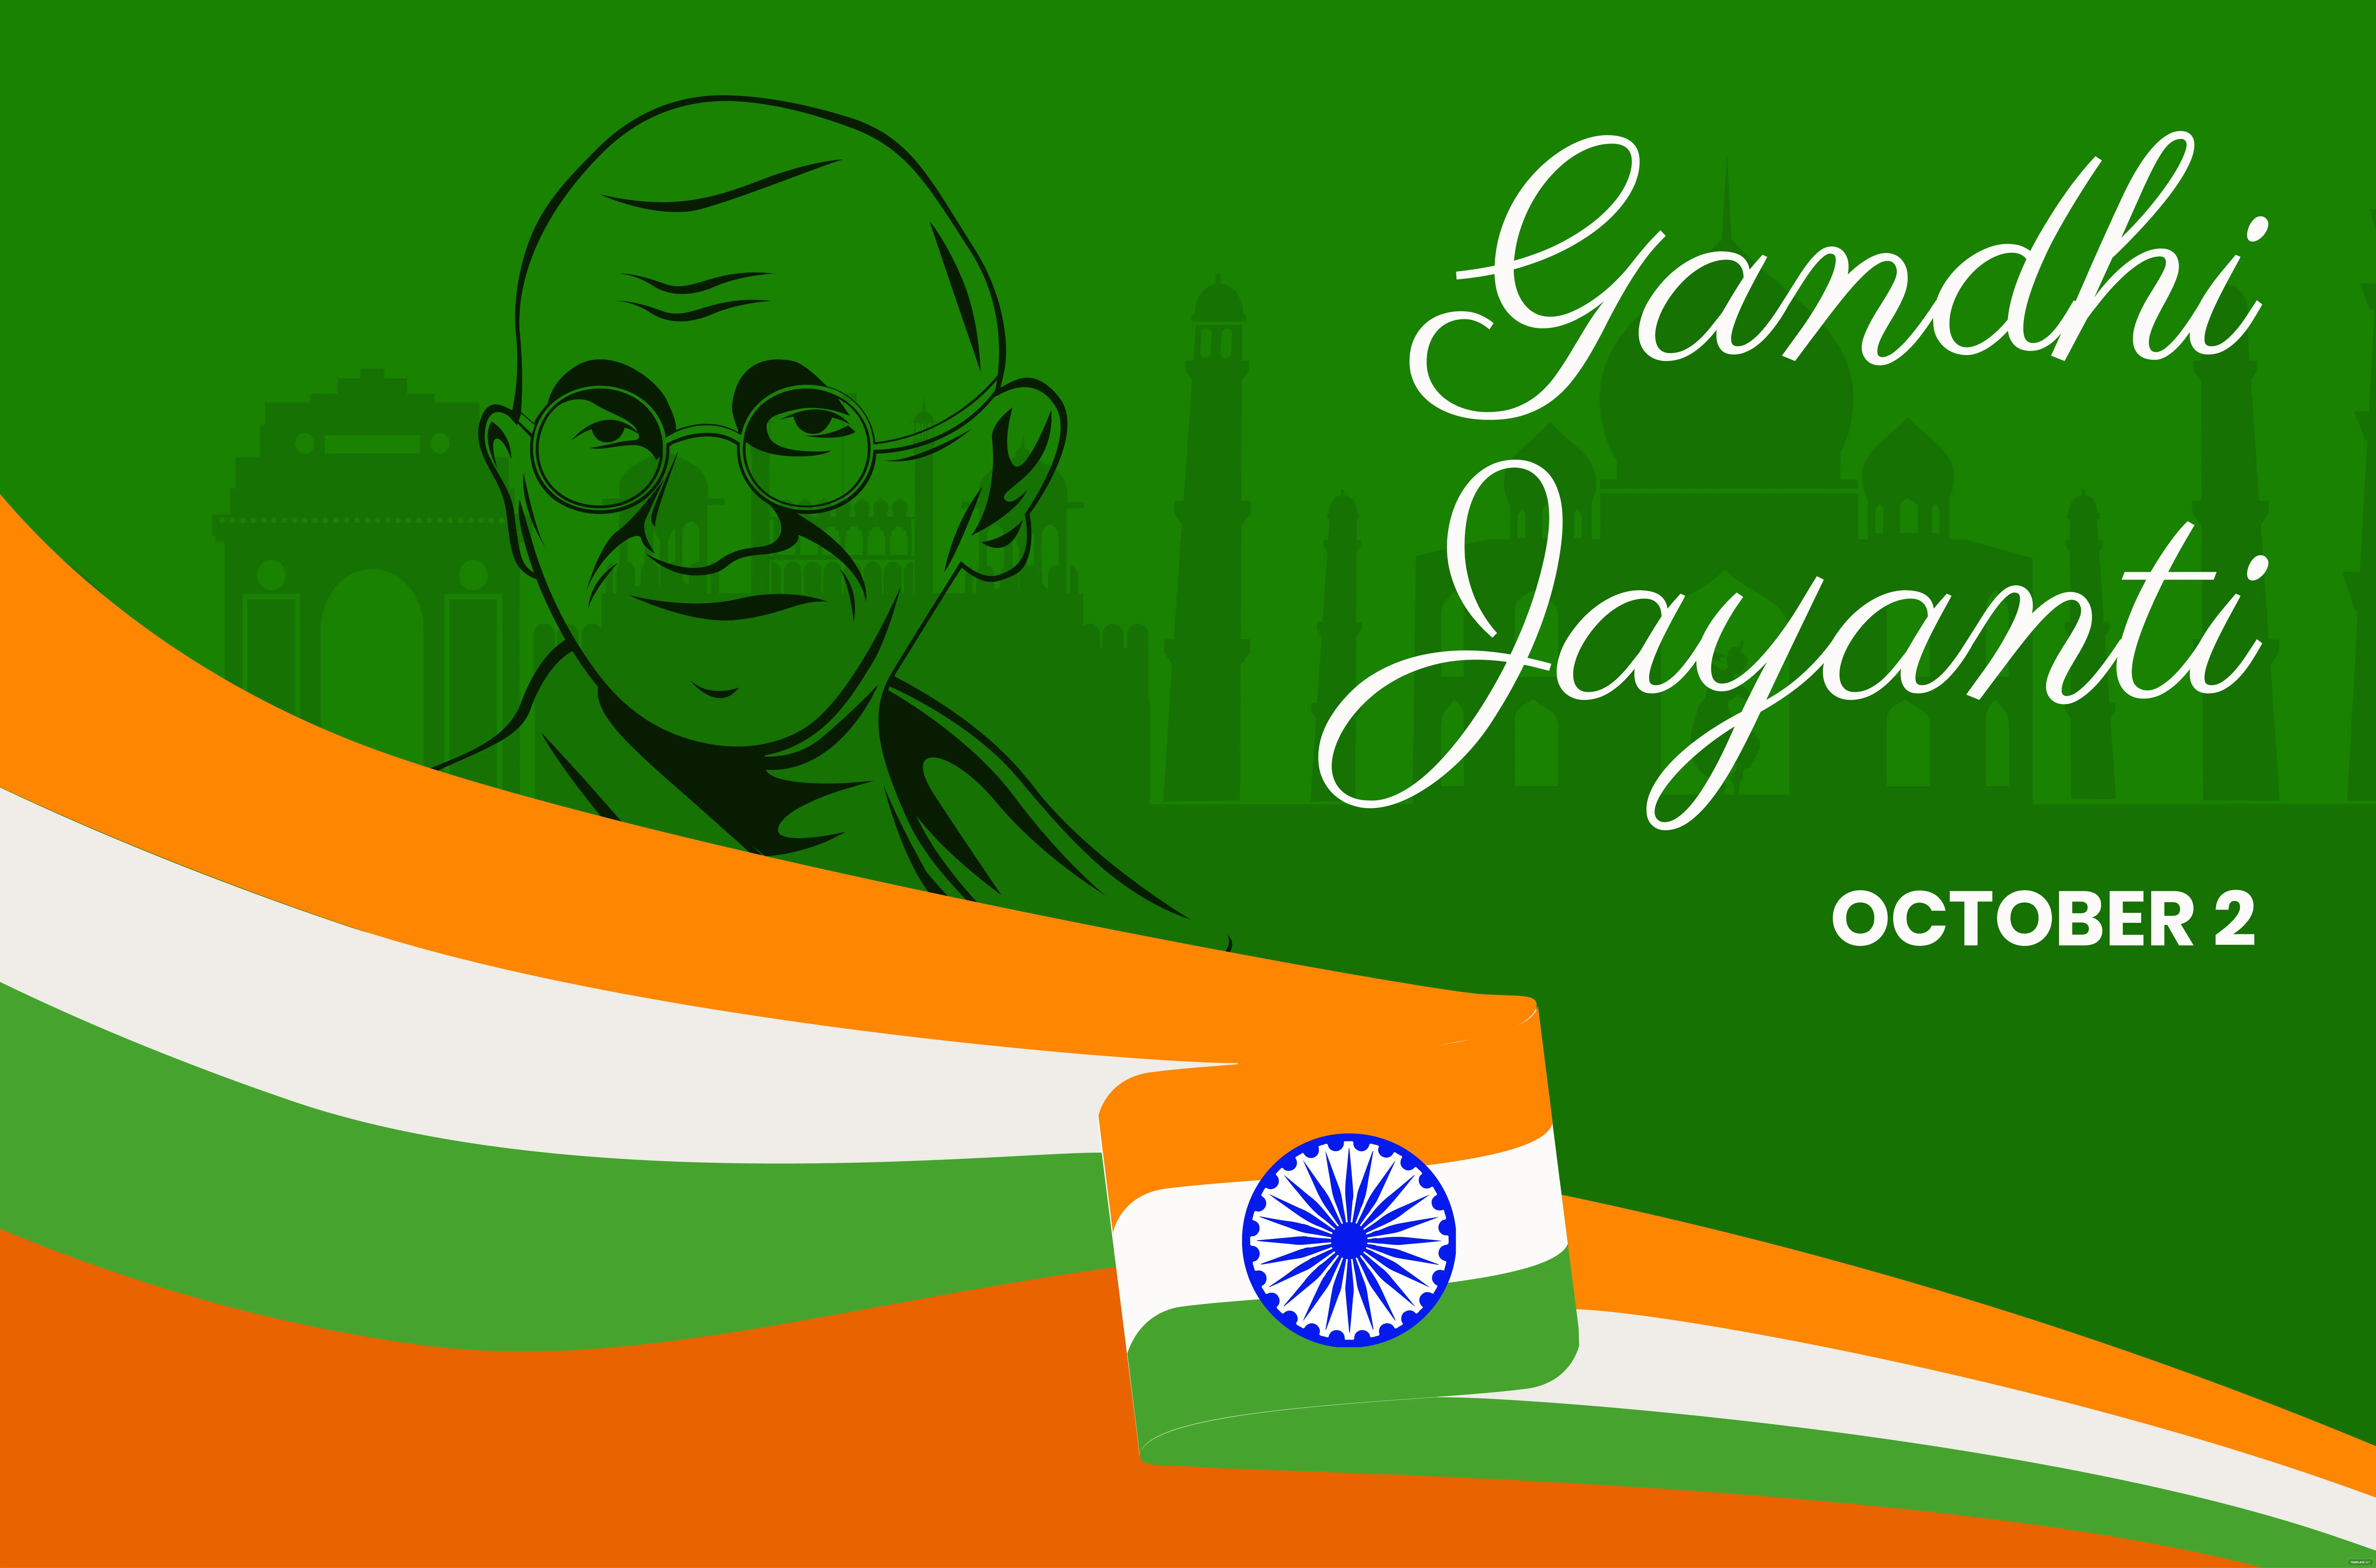 gandhi jayanti banner ideas examples